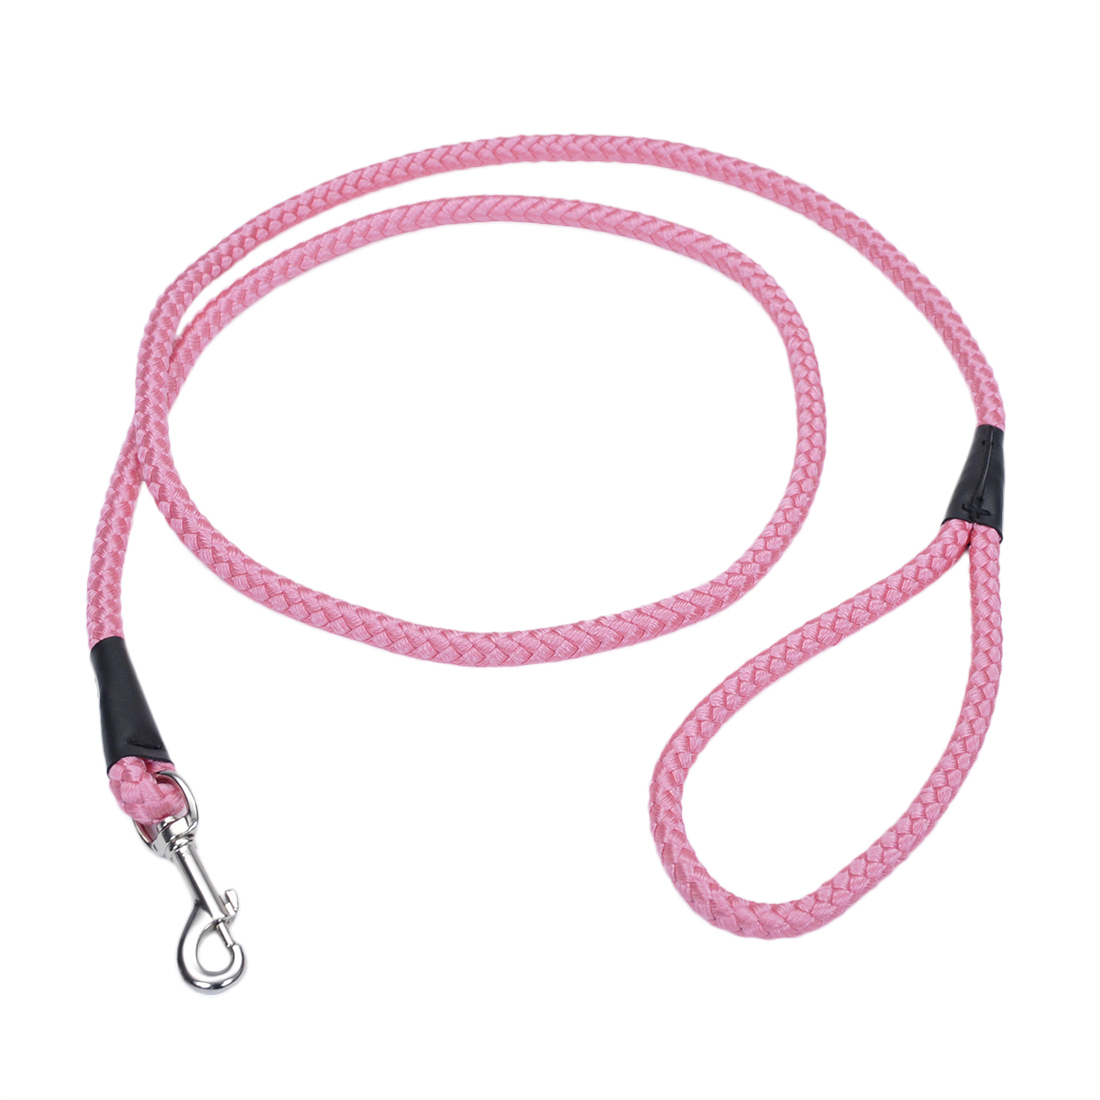 Coastal Dog Rope Leash Bright Pink